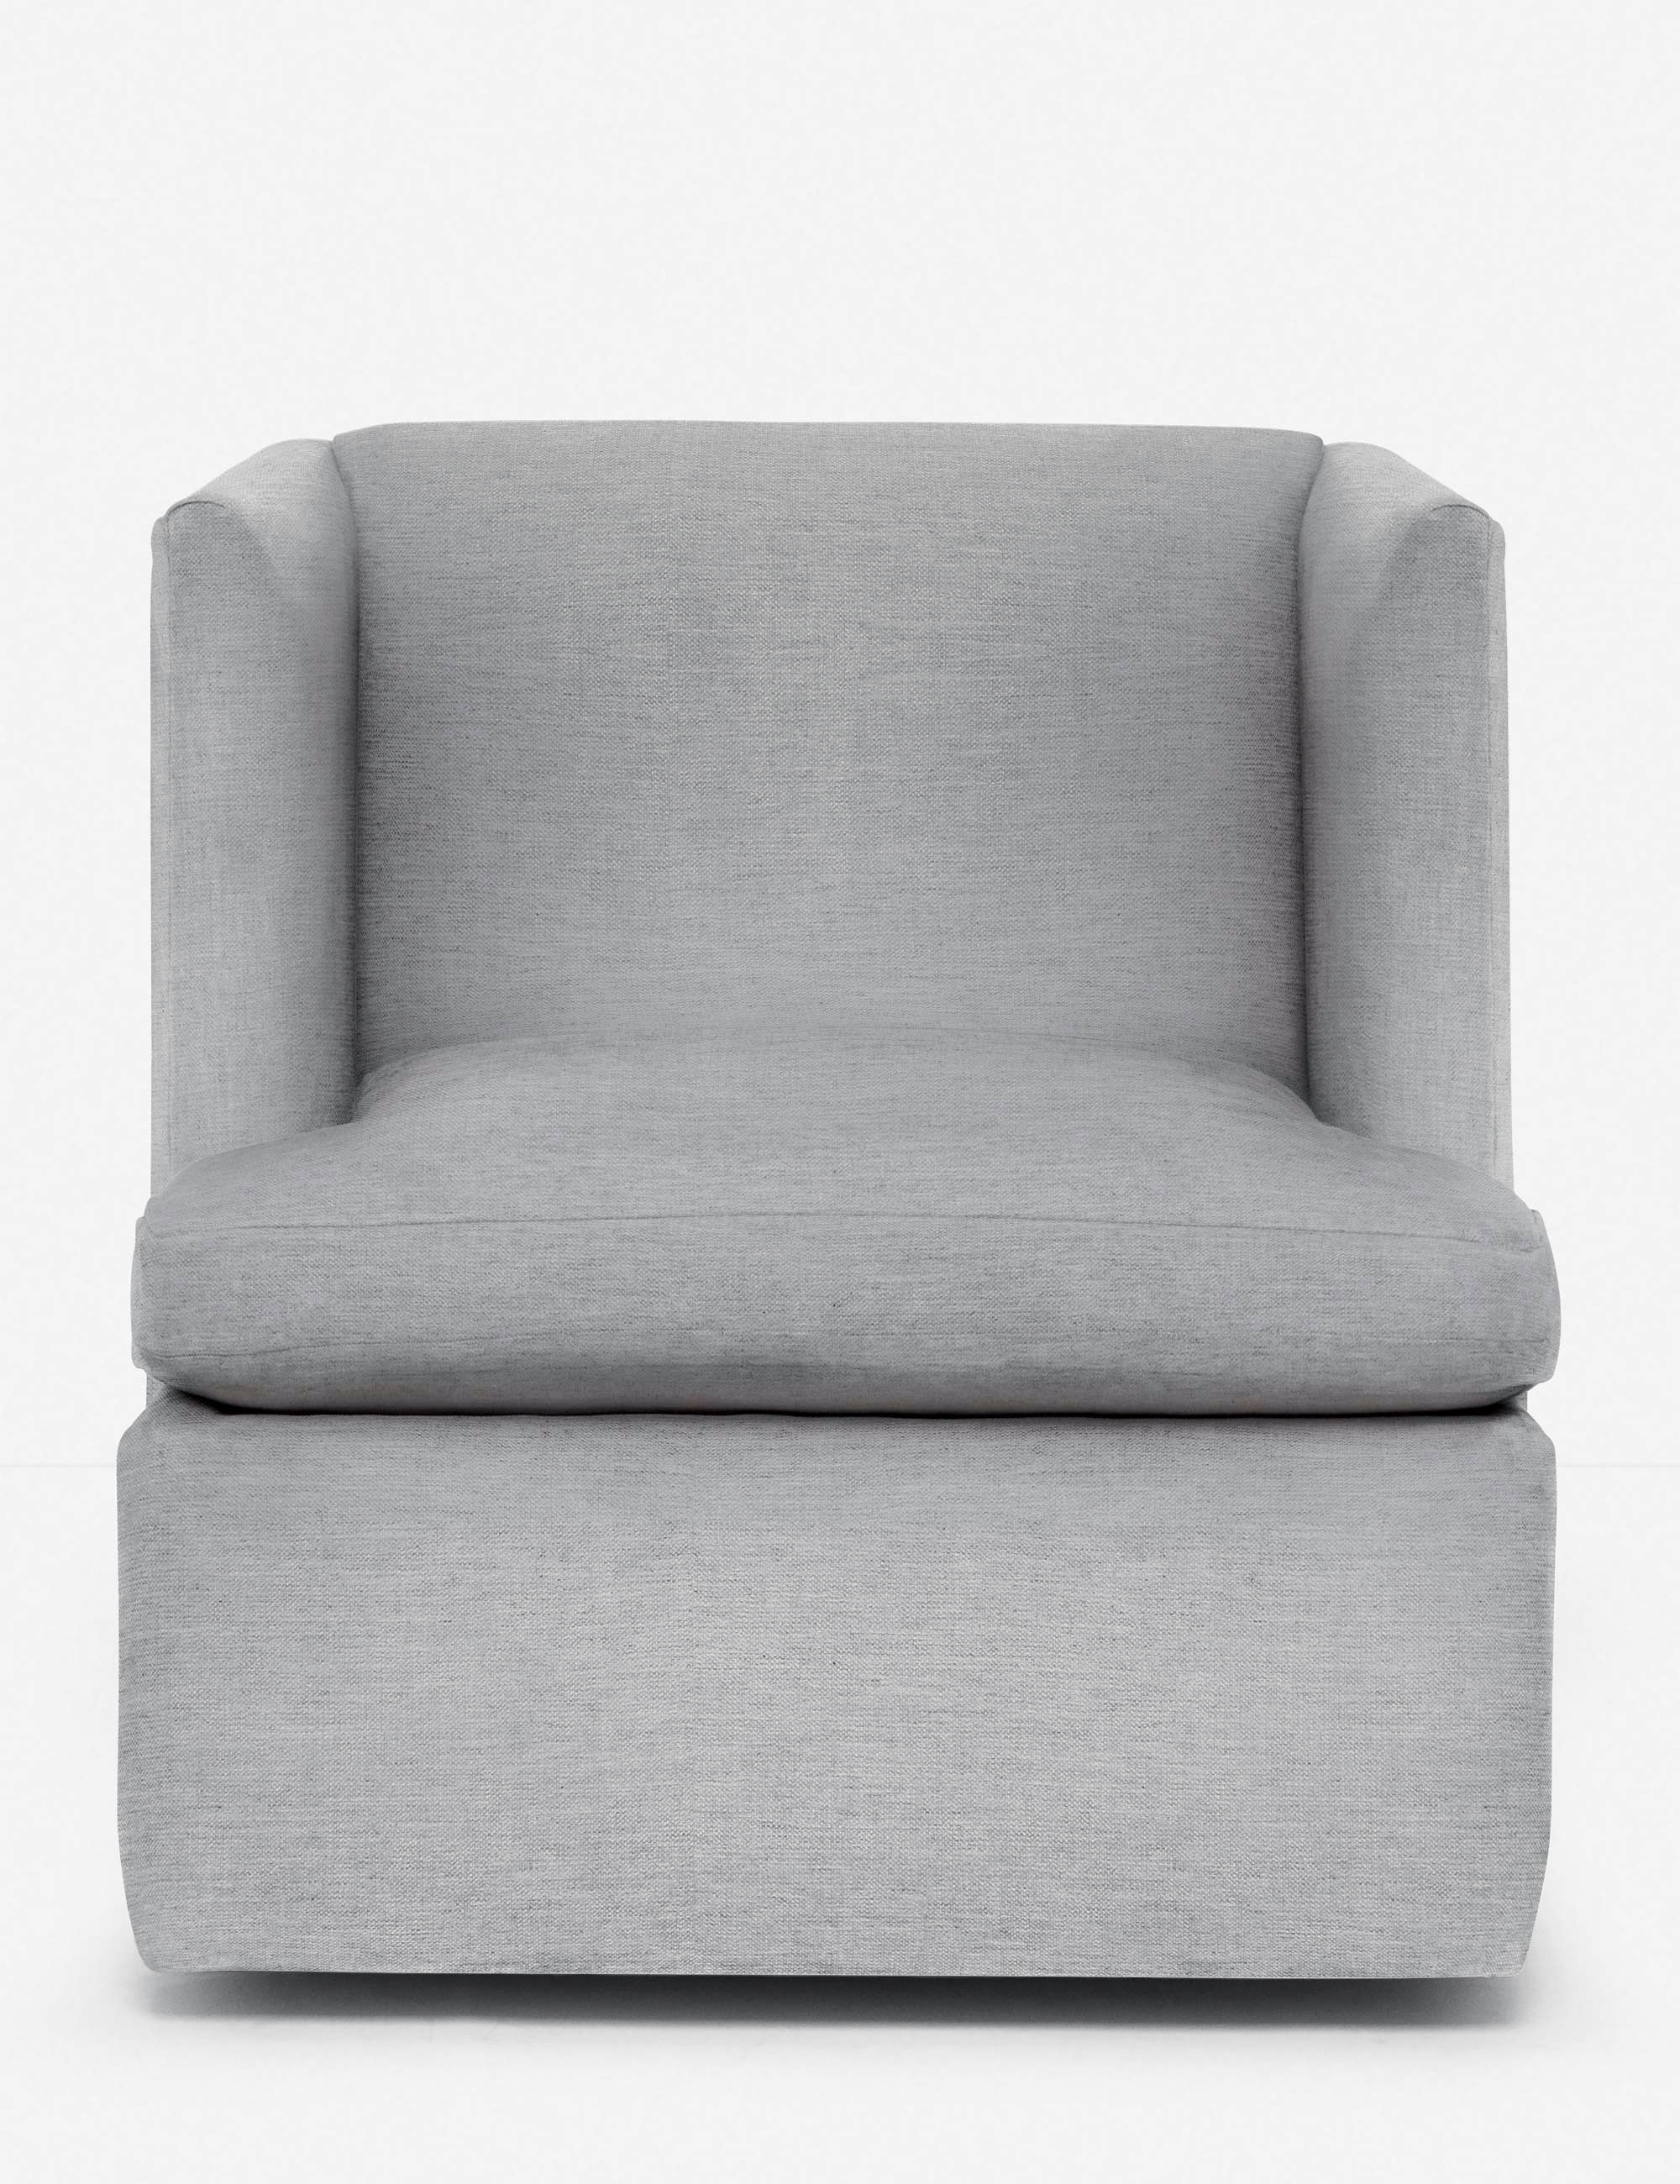 Hayden Square Swivel Chair, Light Gray - Image 0